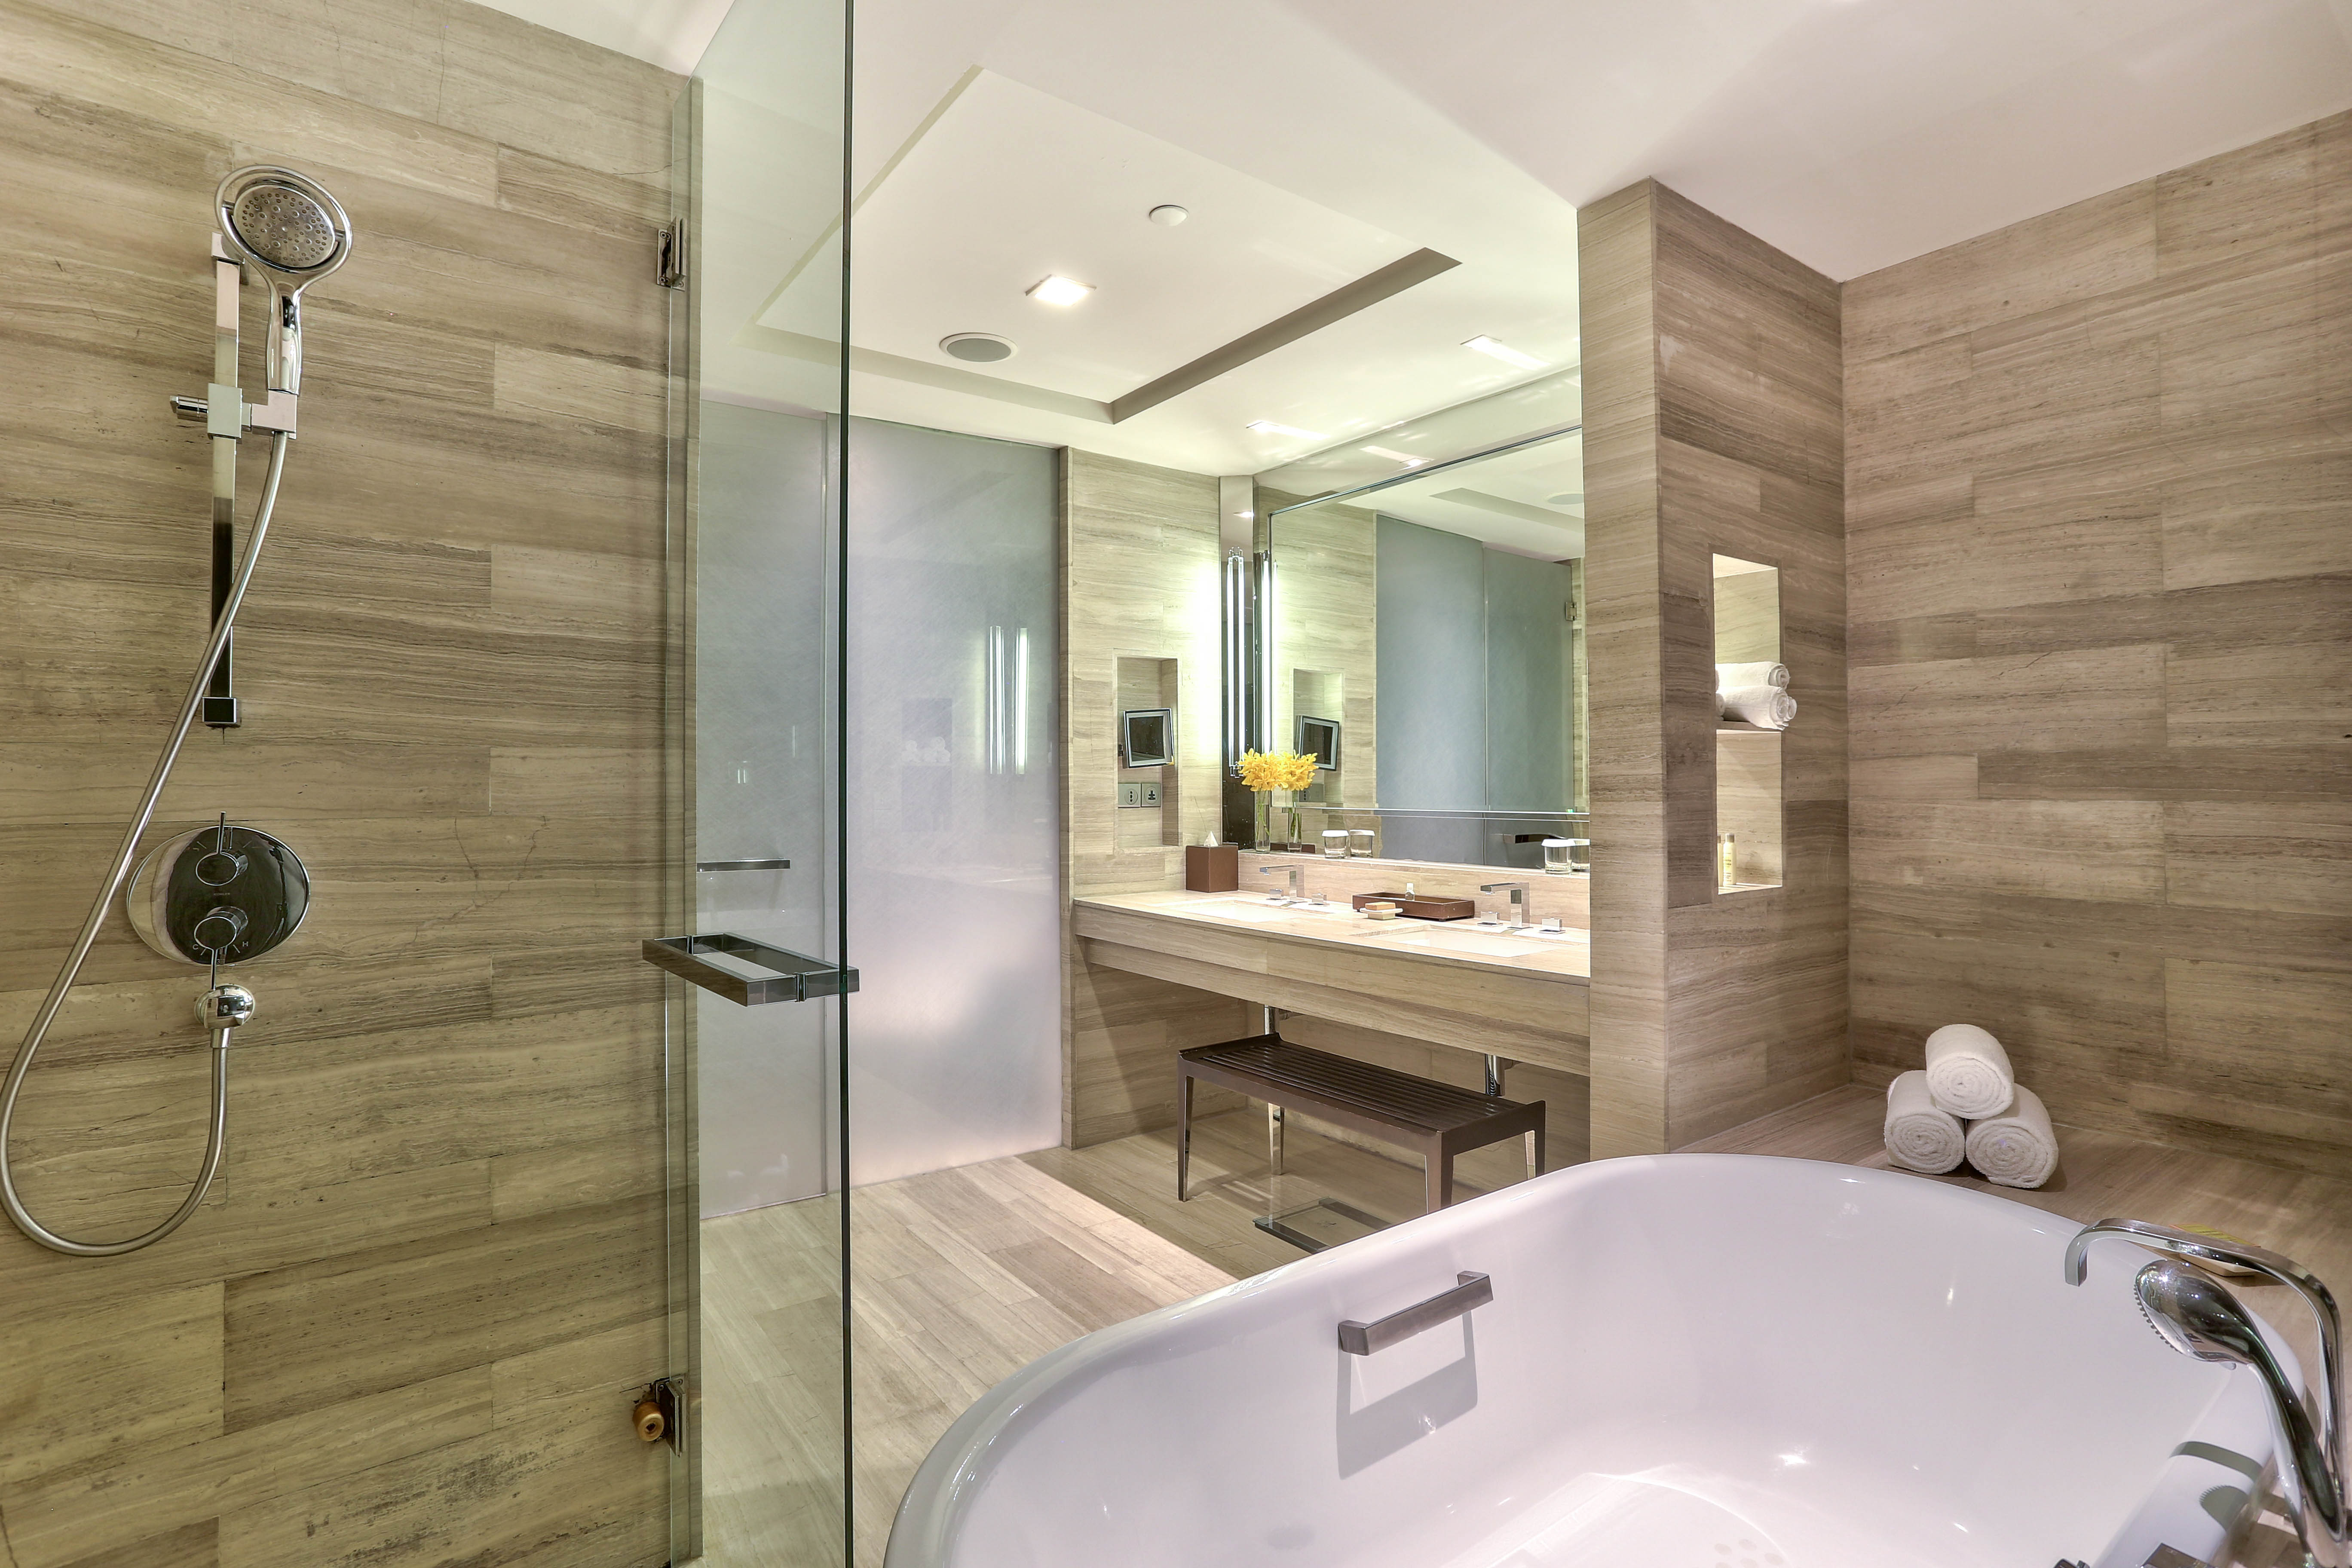 Junior suite bathroom tub, shower, vanity mirror, sink, bench, and towels